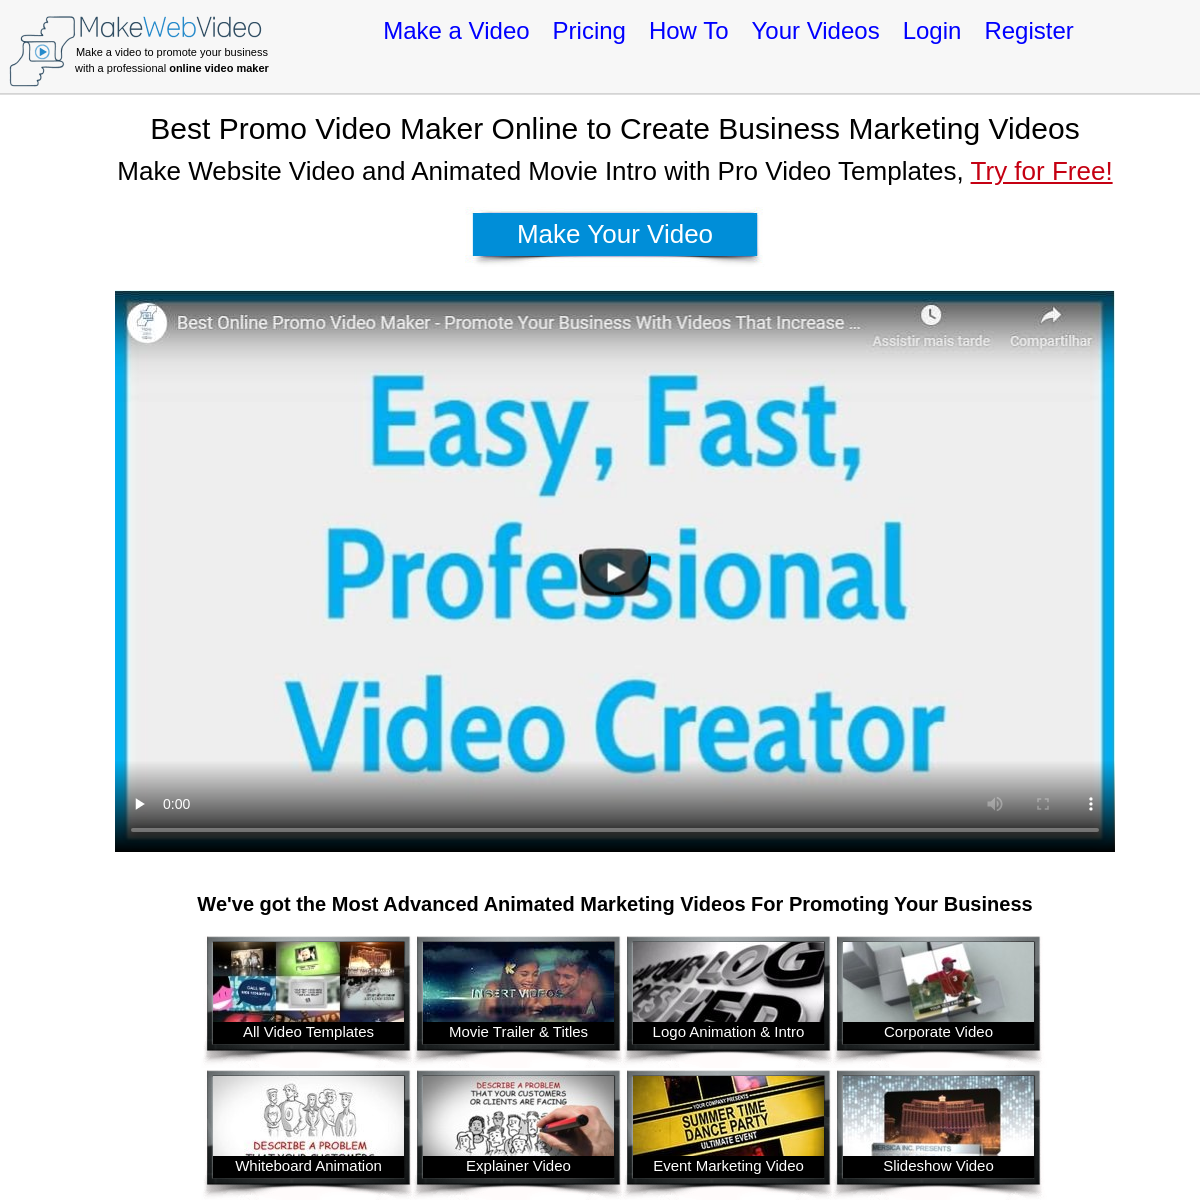 Promo Video Maker Online - Make Business Marketing Videos